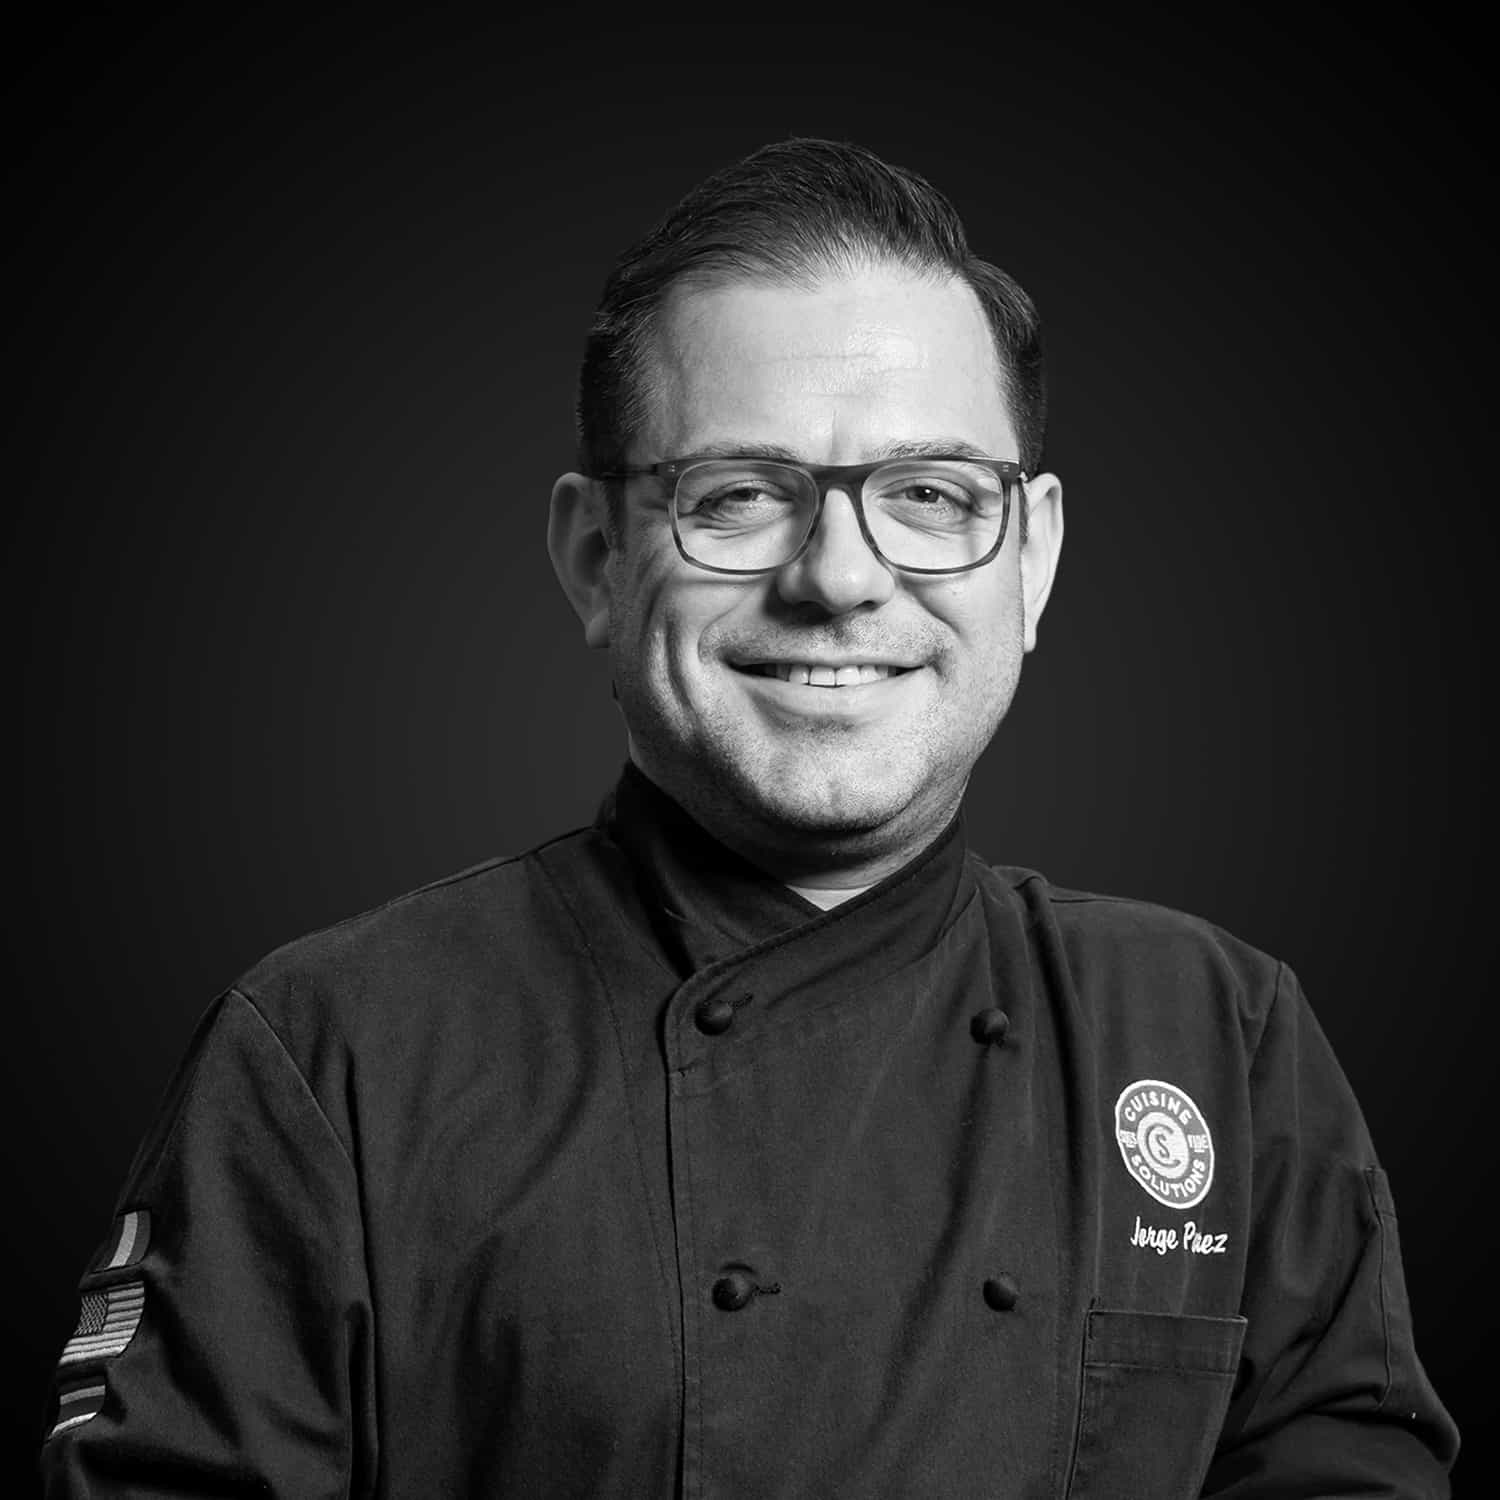 Portrait of Chef Jorge Perez